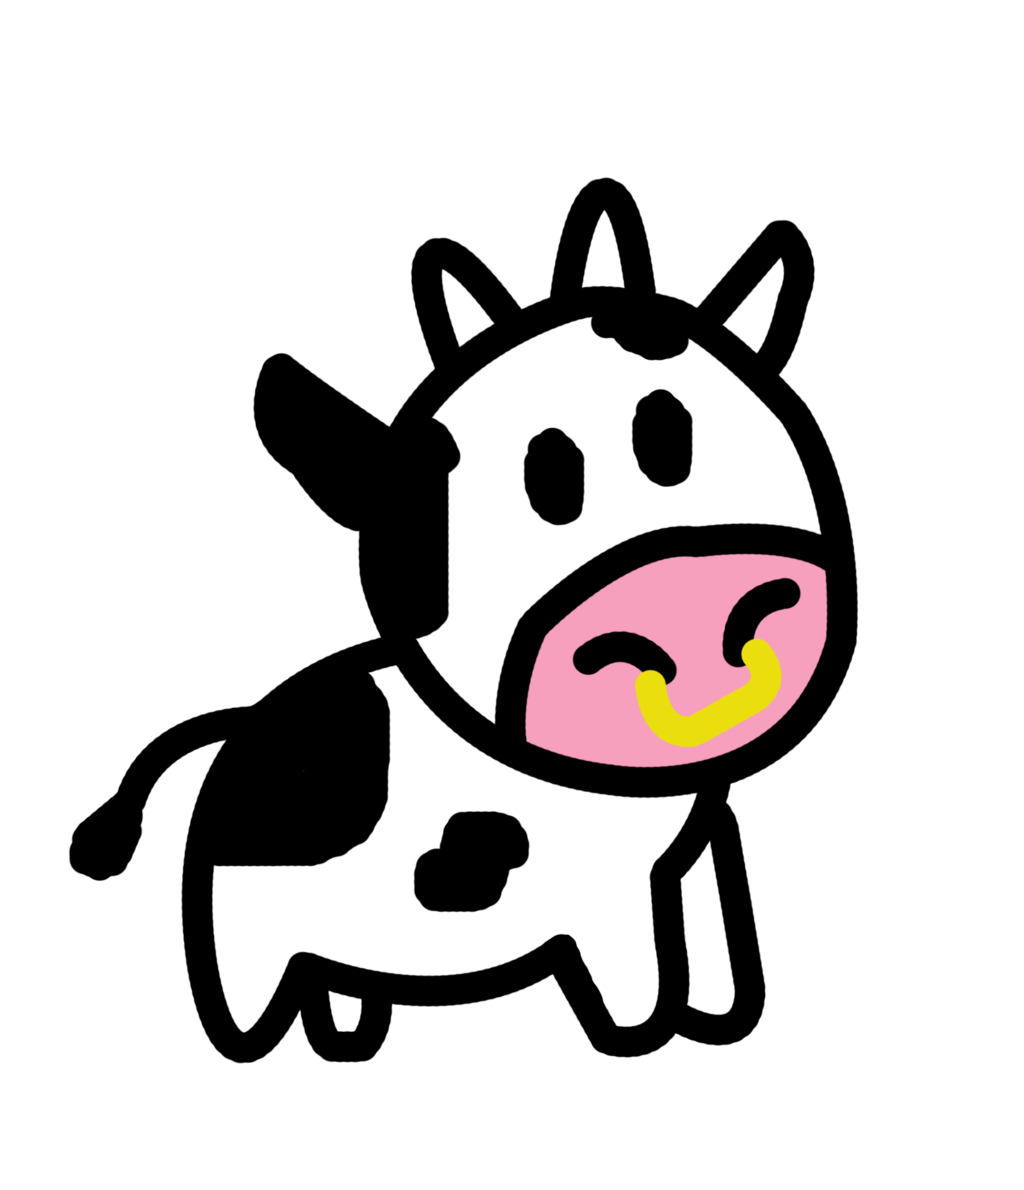 Cartoon Cow Image 